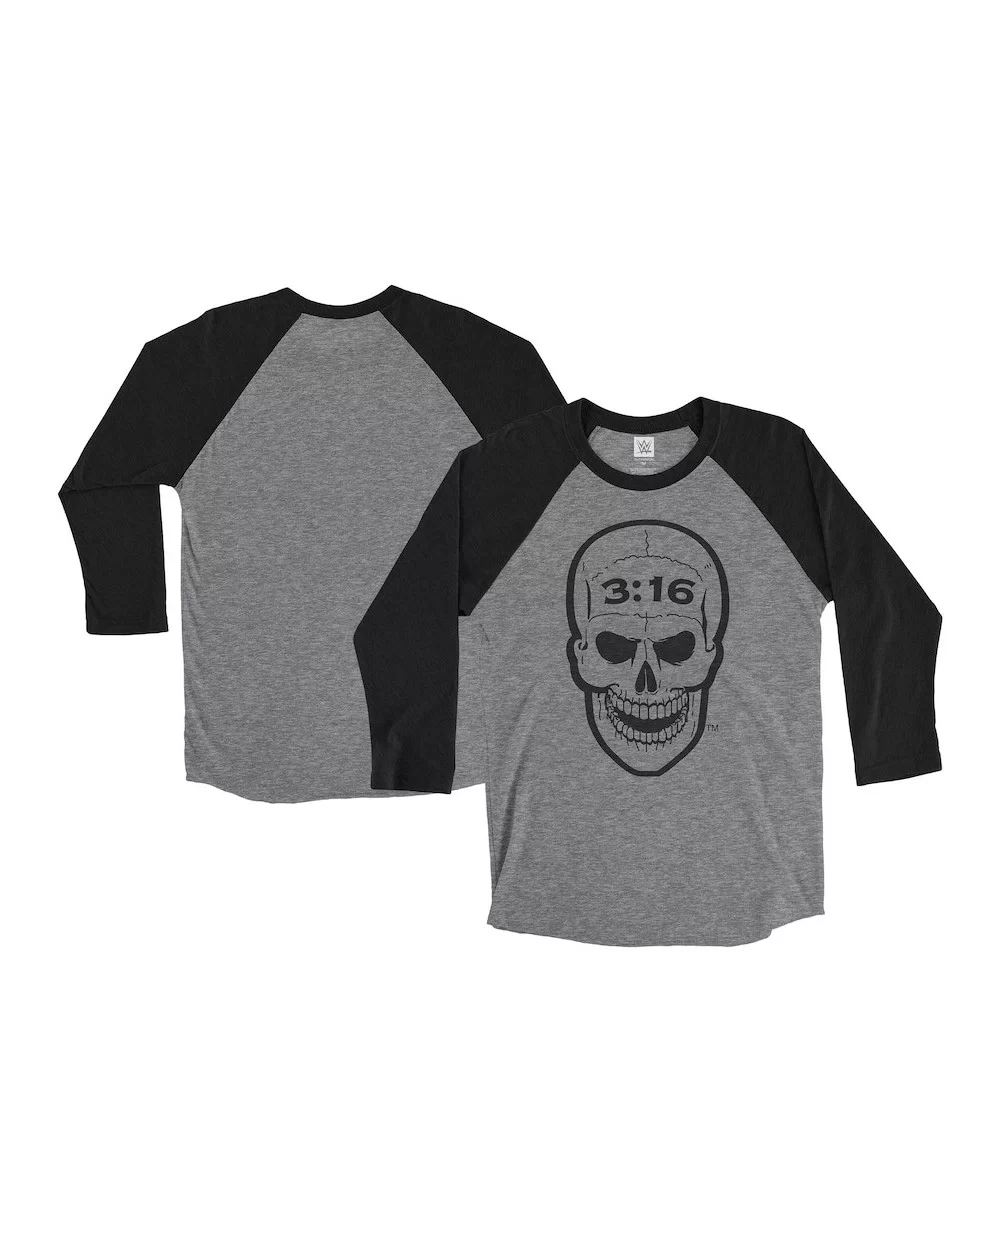 Men's Gray "Stone Cold" Steve Austin 3:16 Skull Raglan Long Sleeve T-Shirt $12.32 T-Shirts